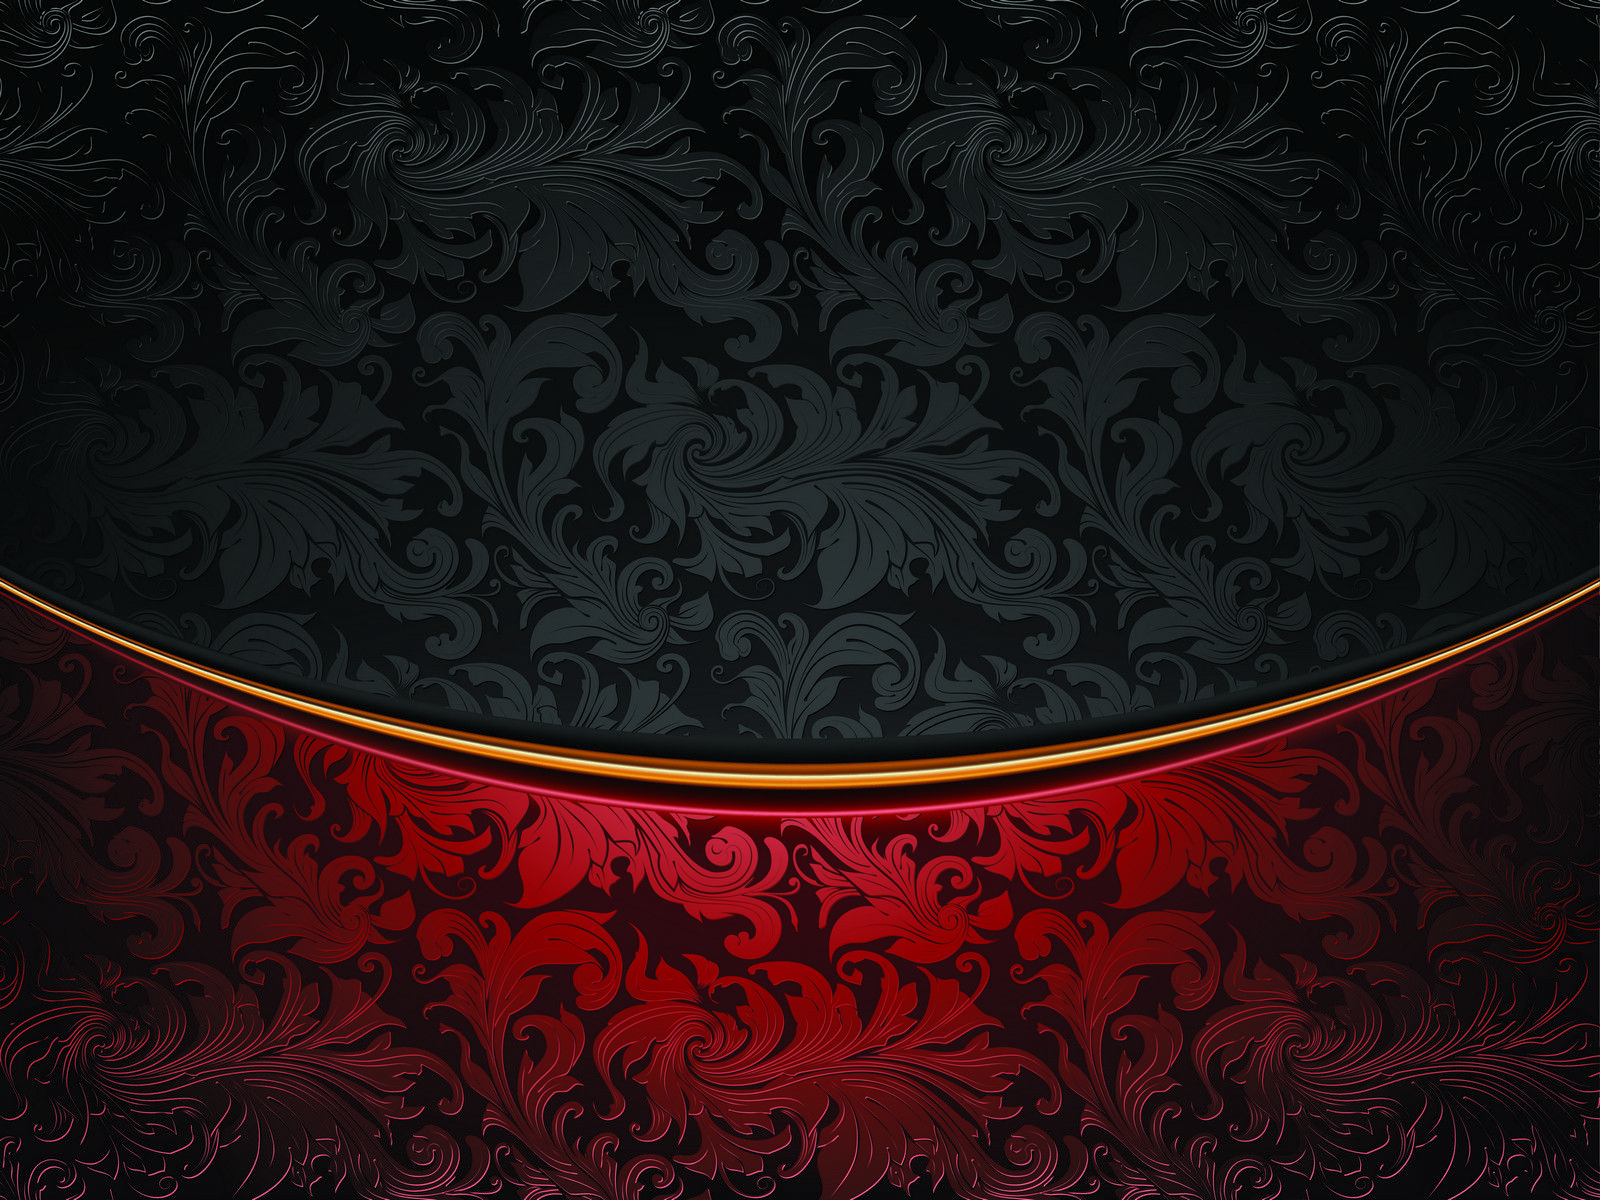 Black Red Floral Bg PPT Background 1024x768 resolutions, Black Red